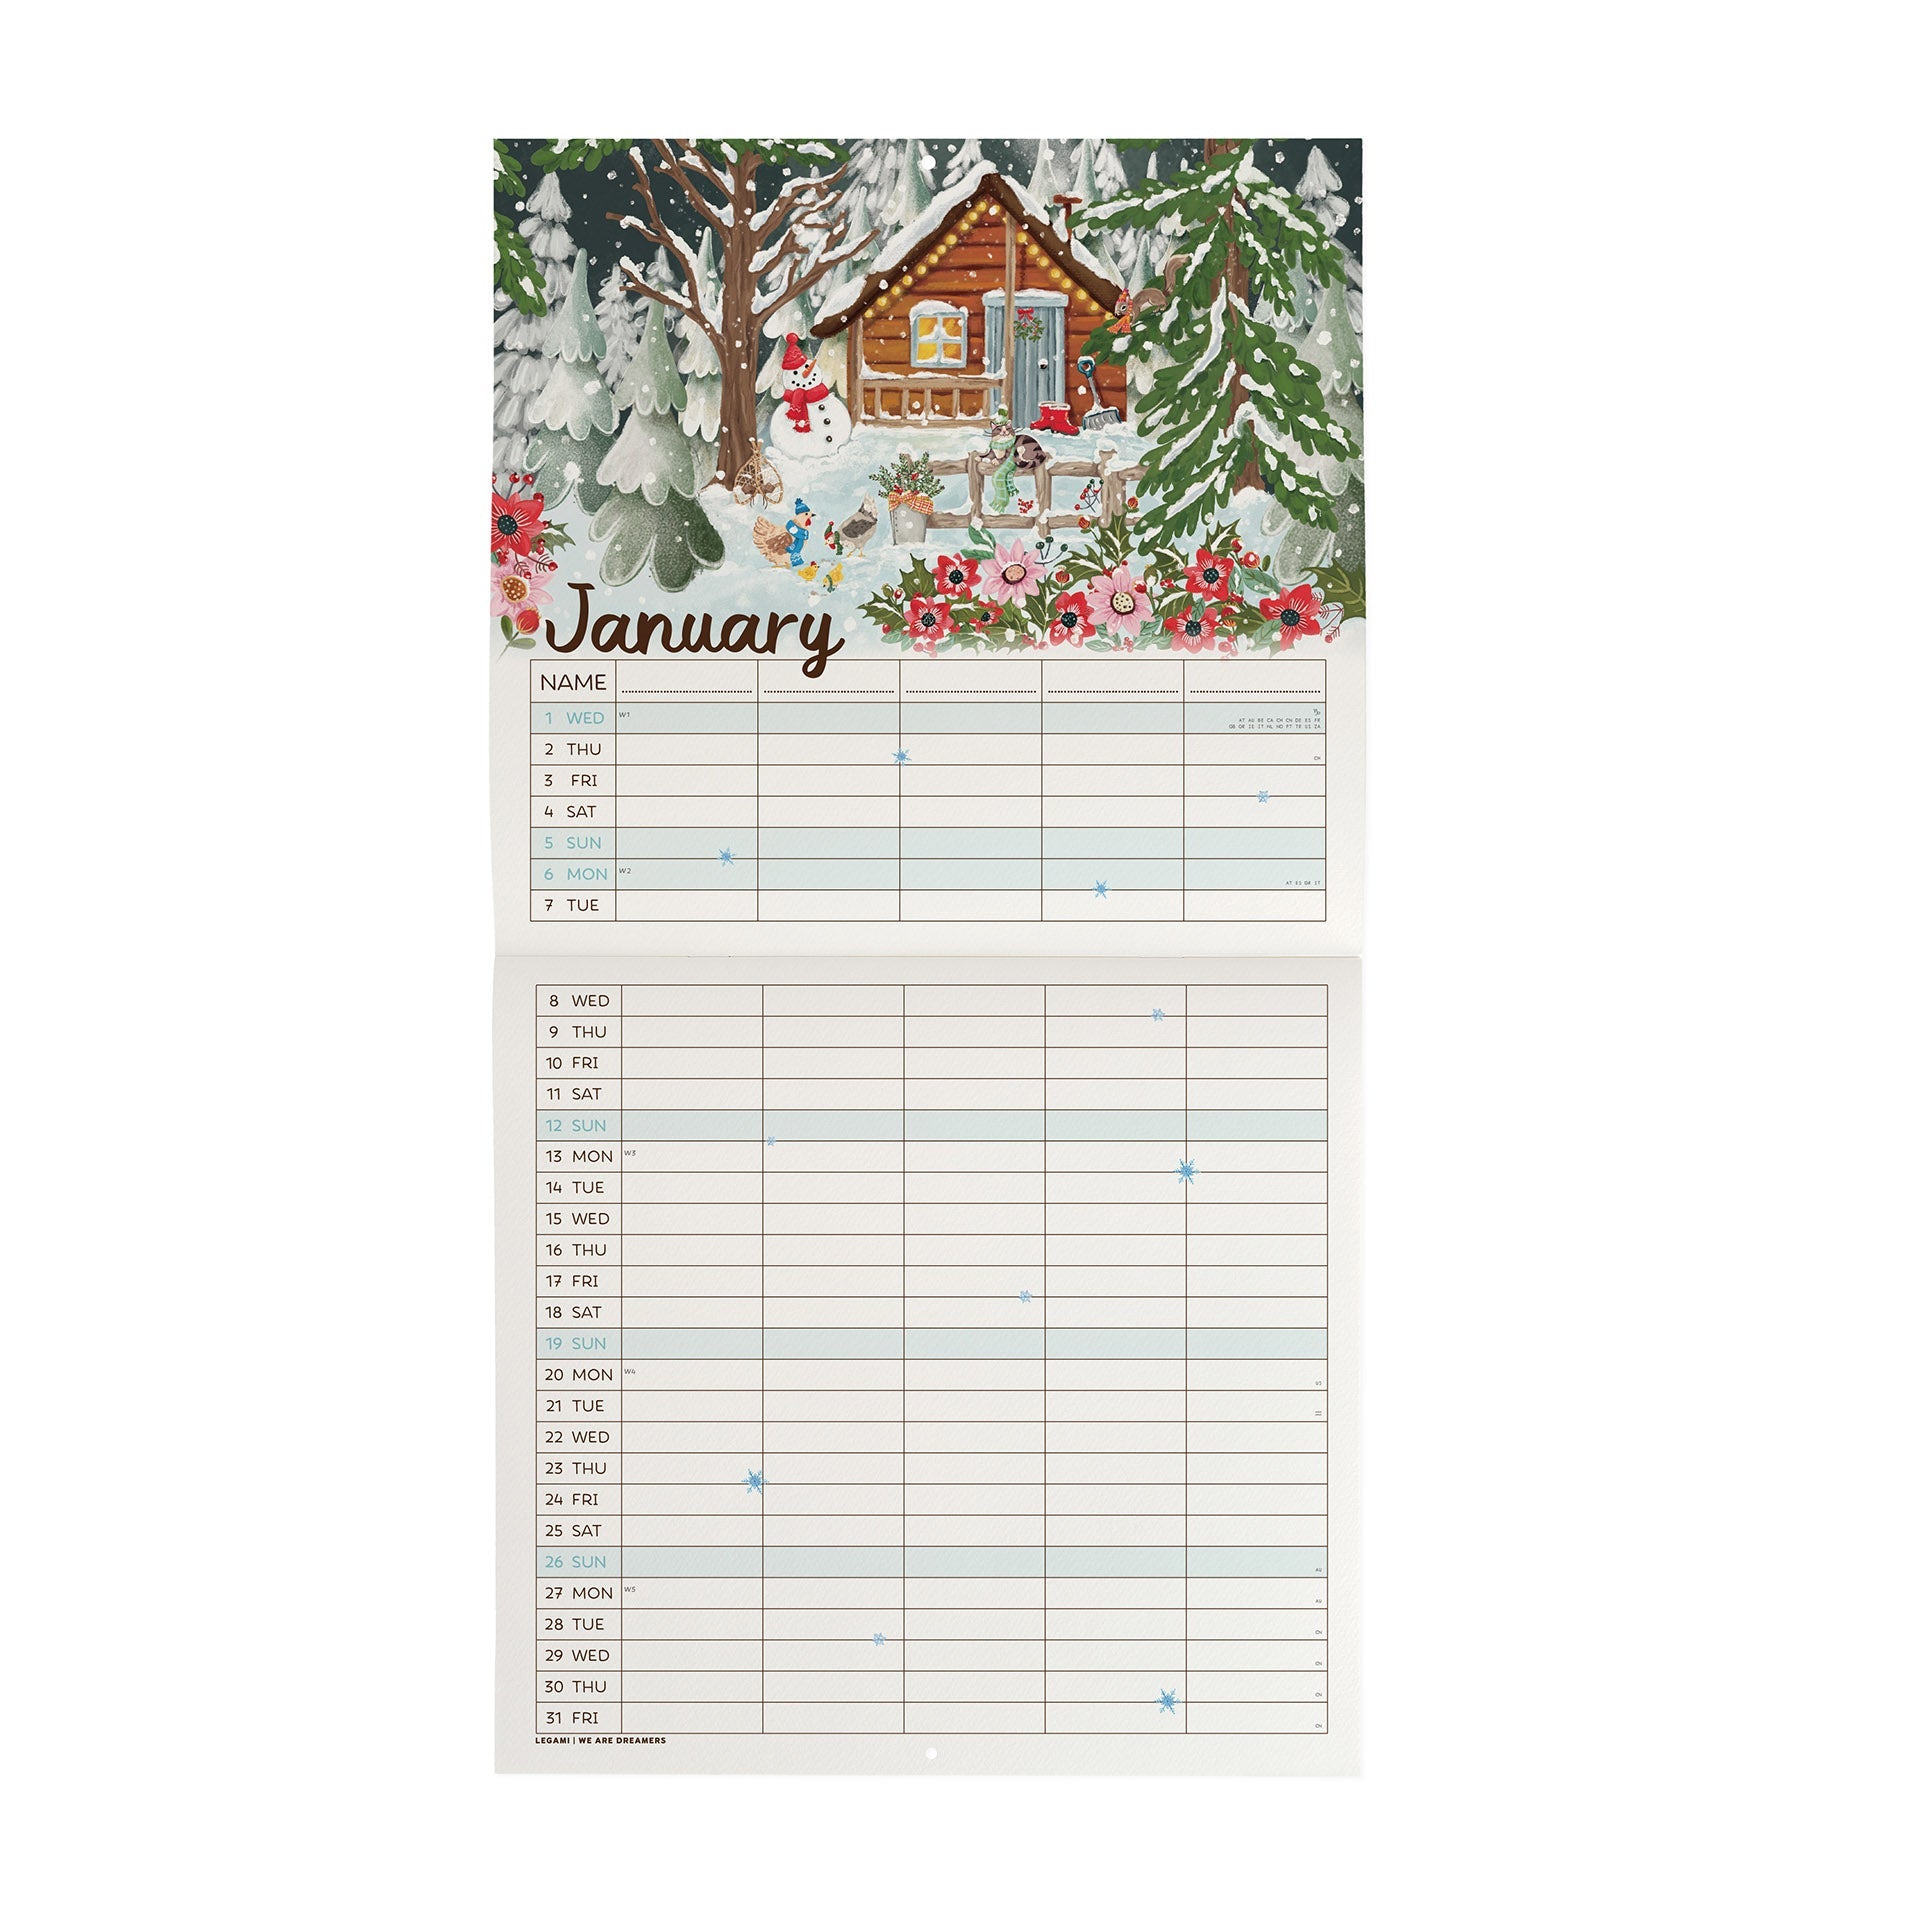 2025 Home Sweet Home - Square Wall Calendar